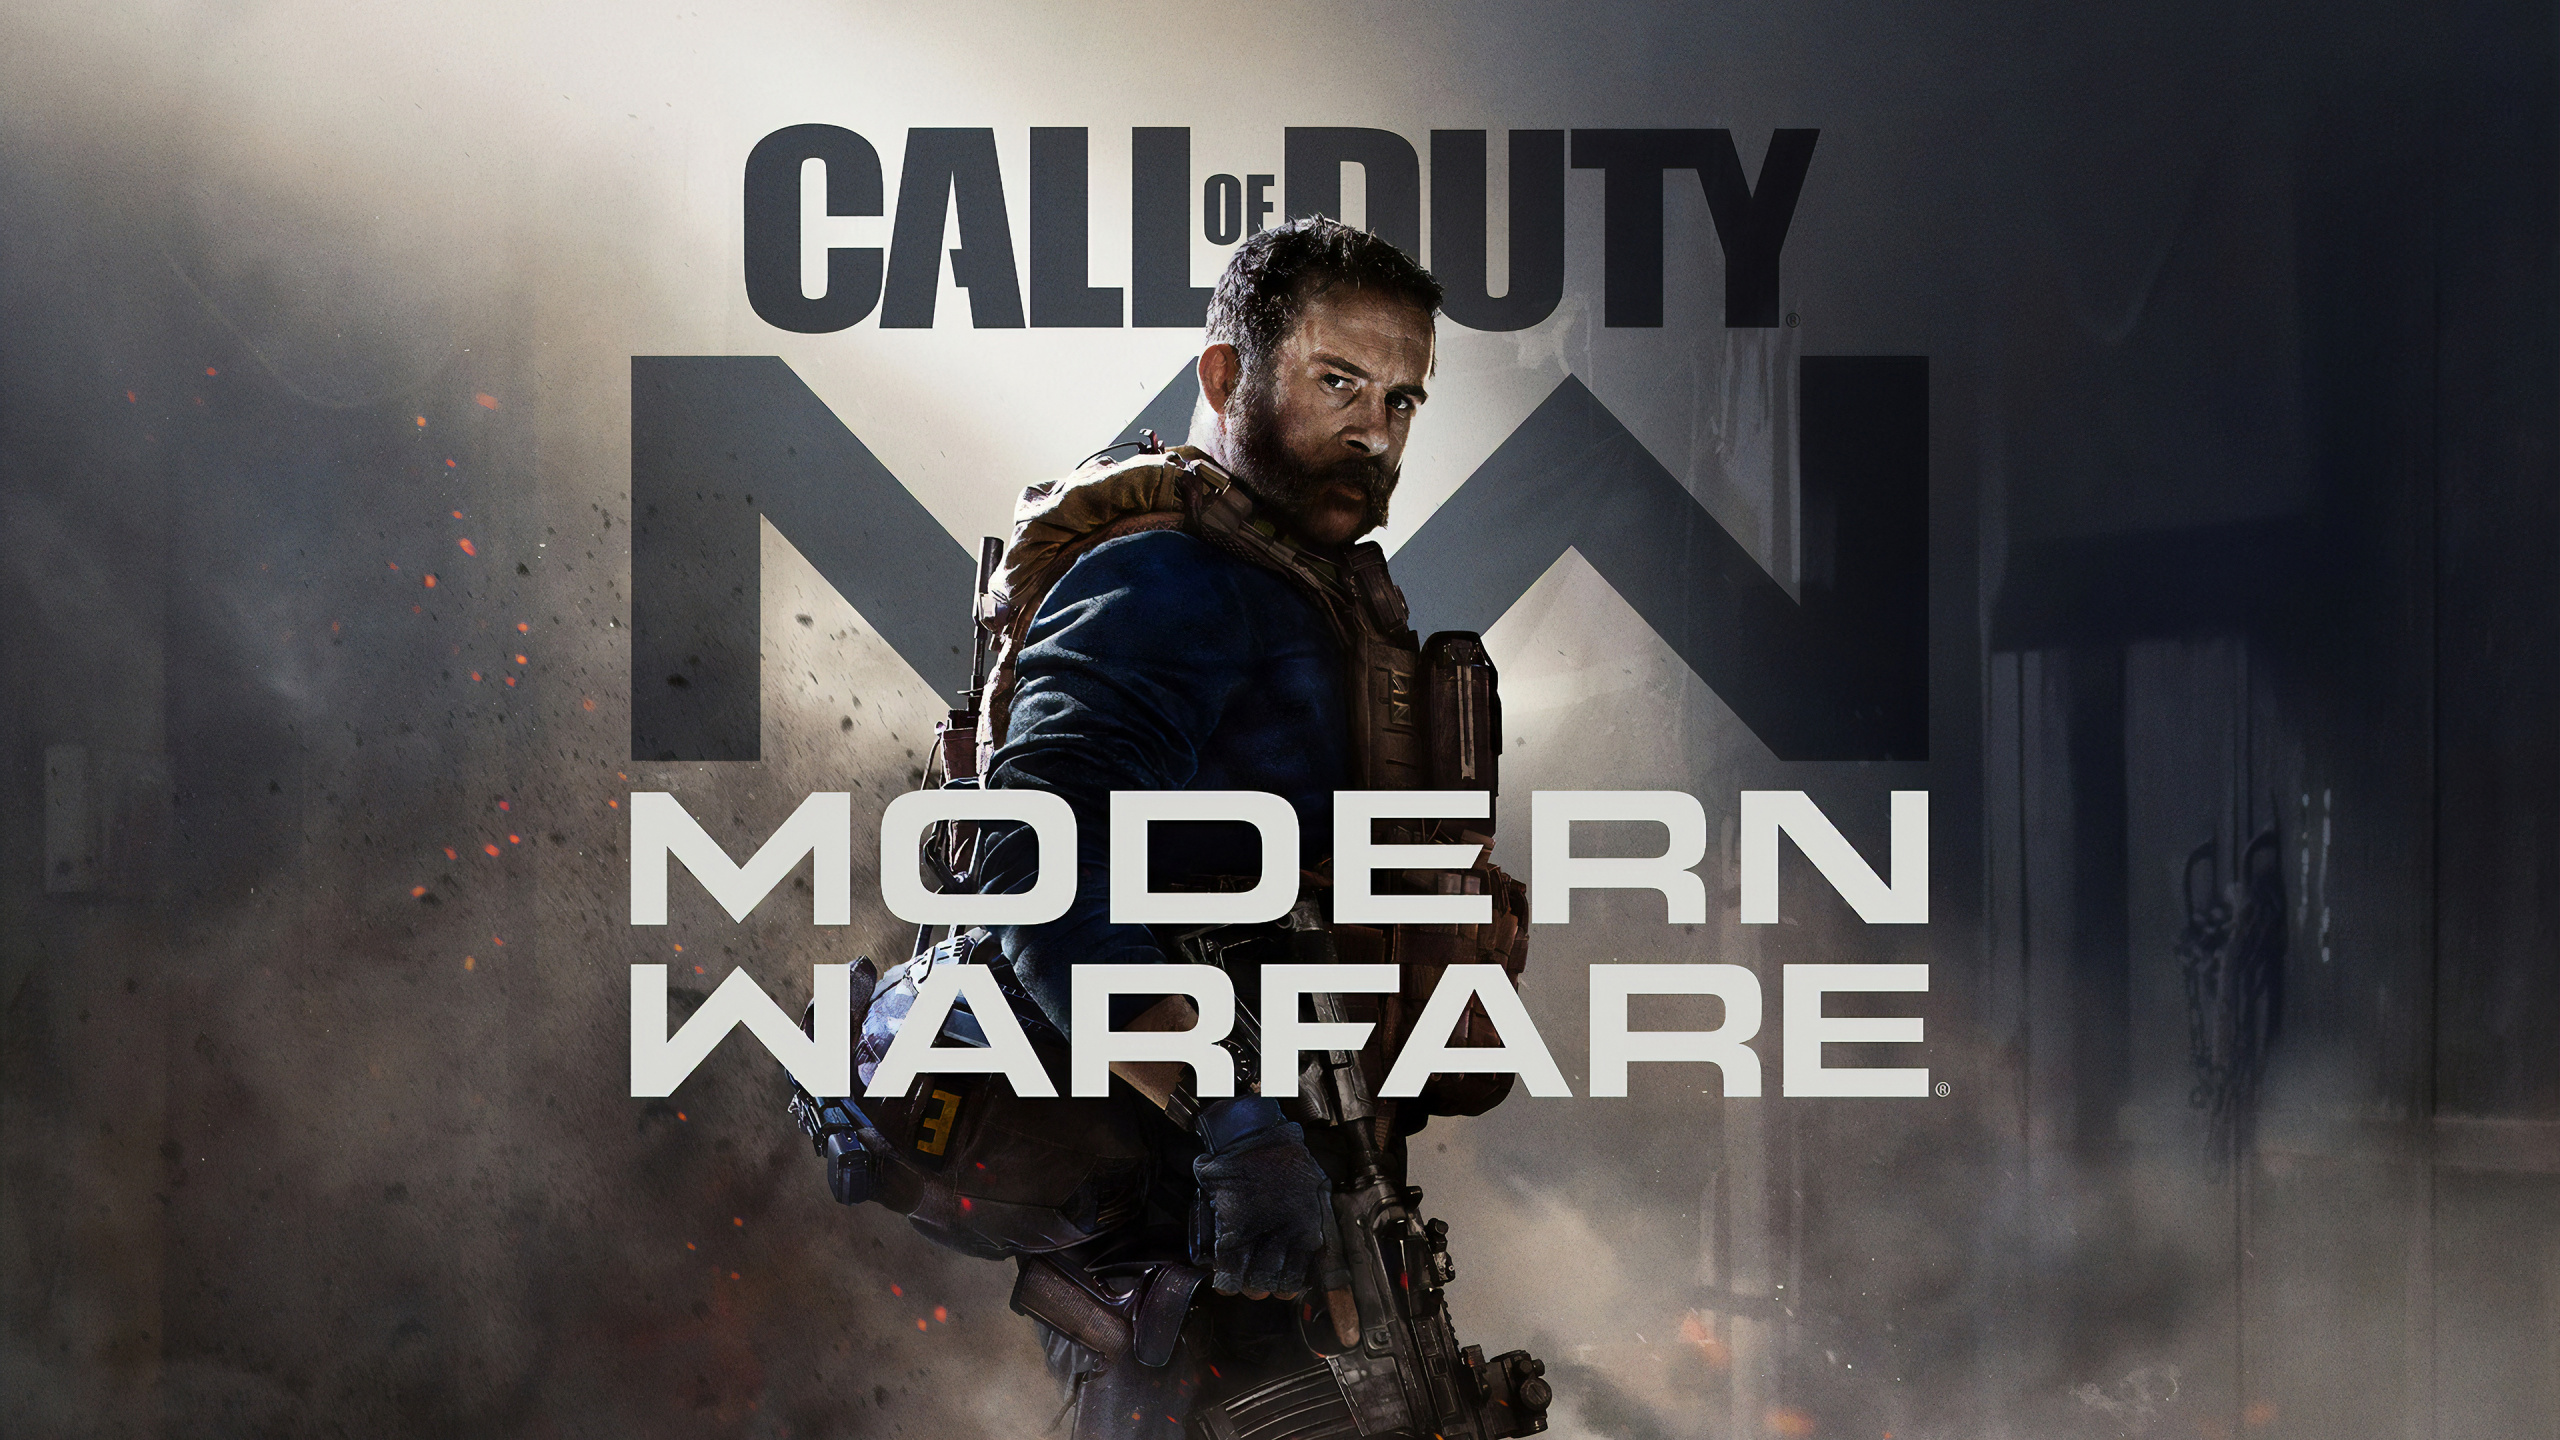 Call of Duty Modern Warfare, Call of Duty 4 Modern Warfare, Movie, pc Game, Shooter Game. Wallpaper in 2560x1440 Resolution